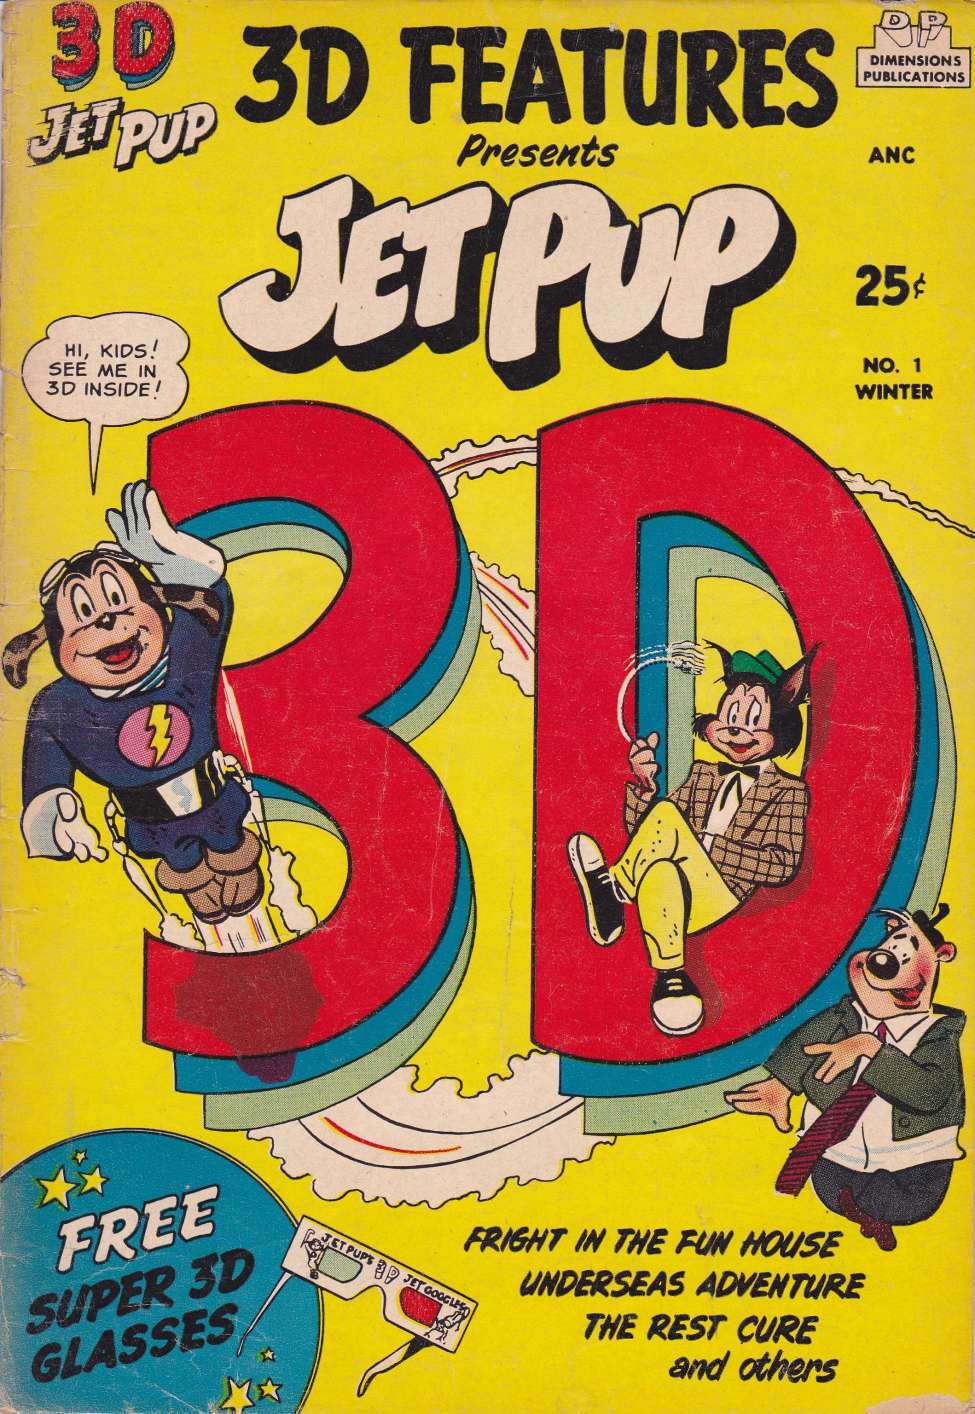 Comic Book Cover For Dimensions Publications - Jet Pup 1 3D